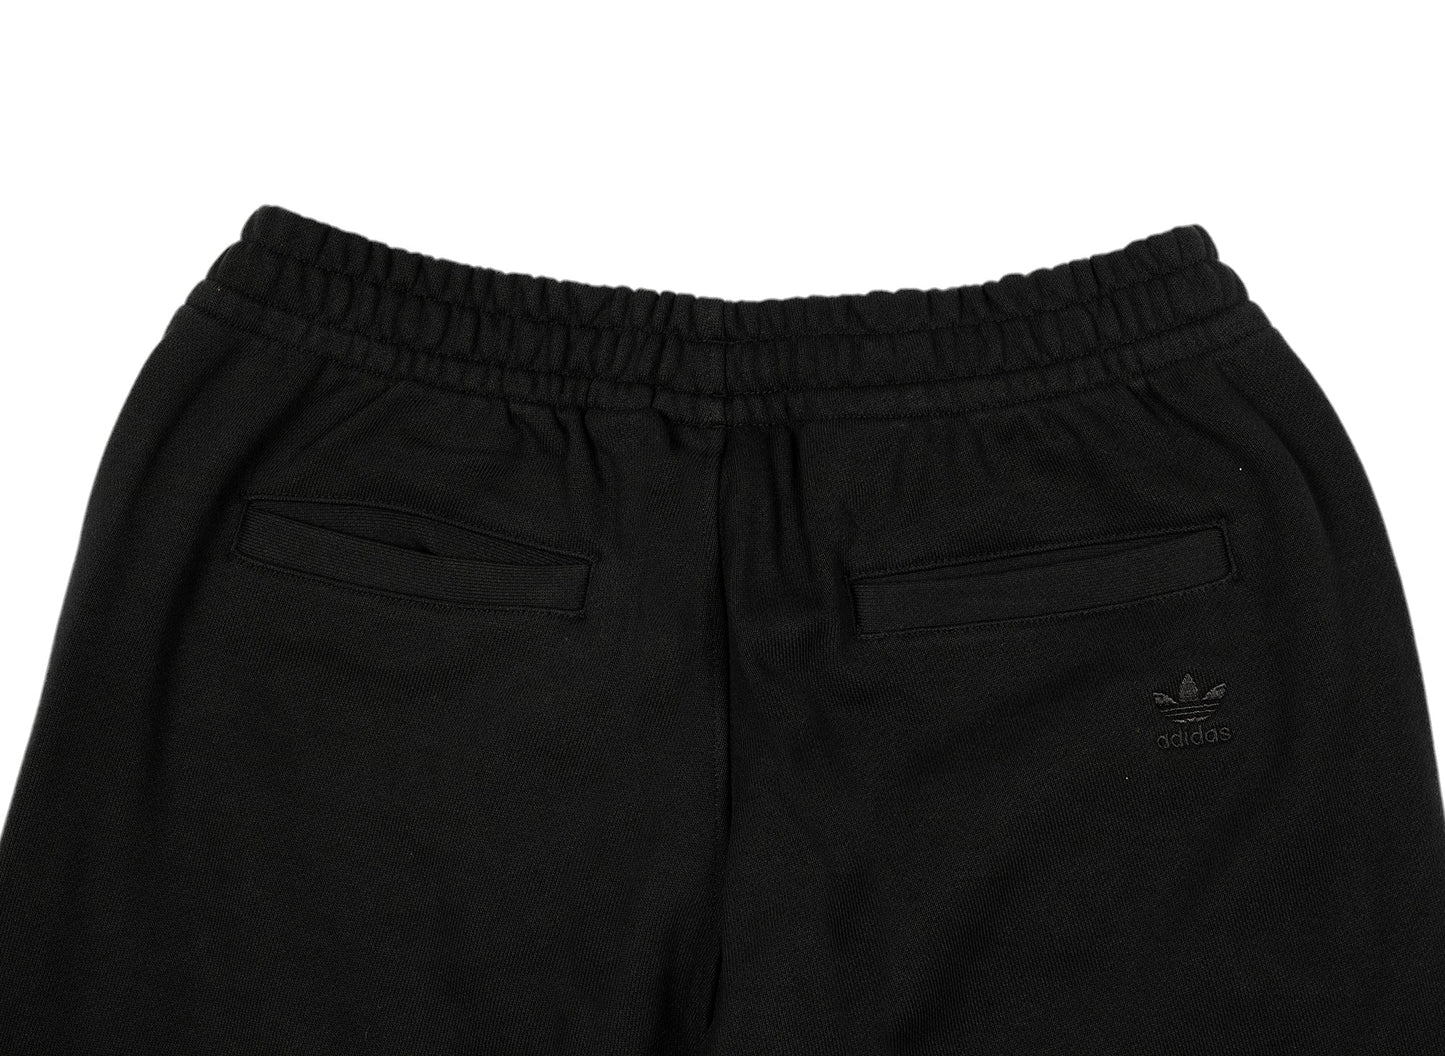 Adidas Pharrell Williams Basics Pants in Black